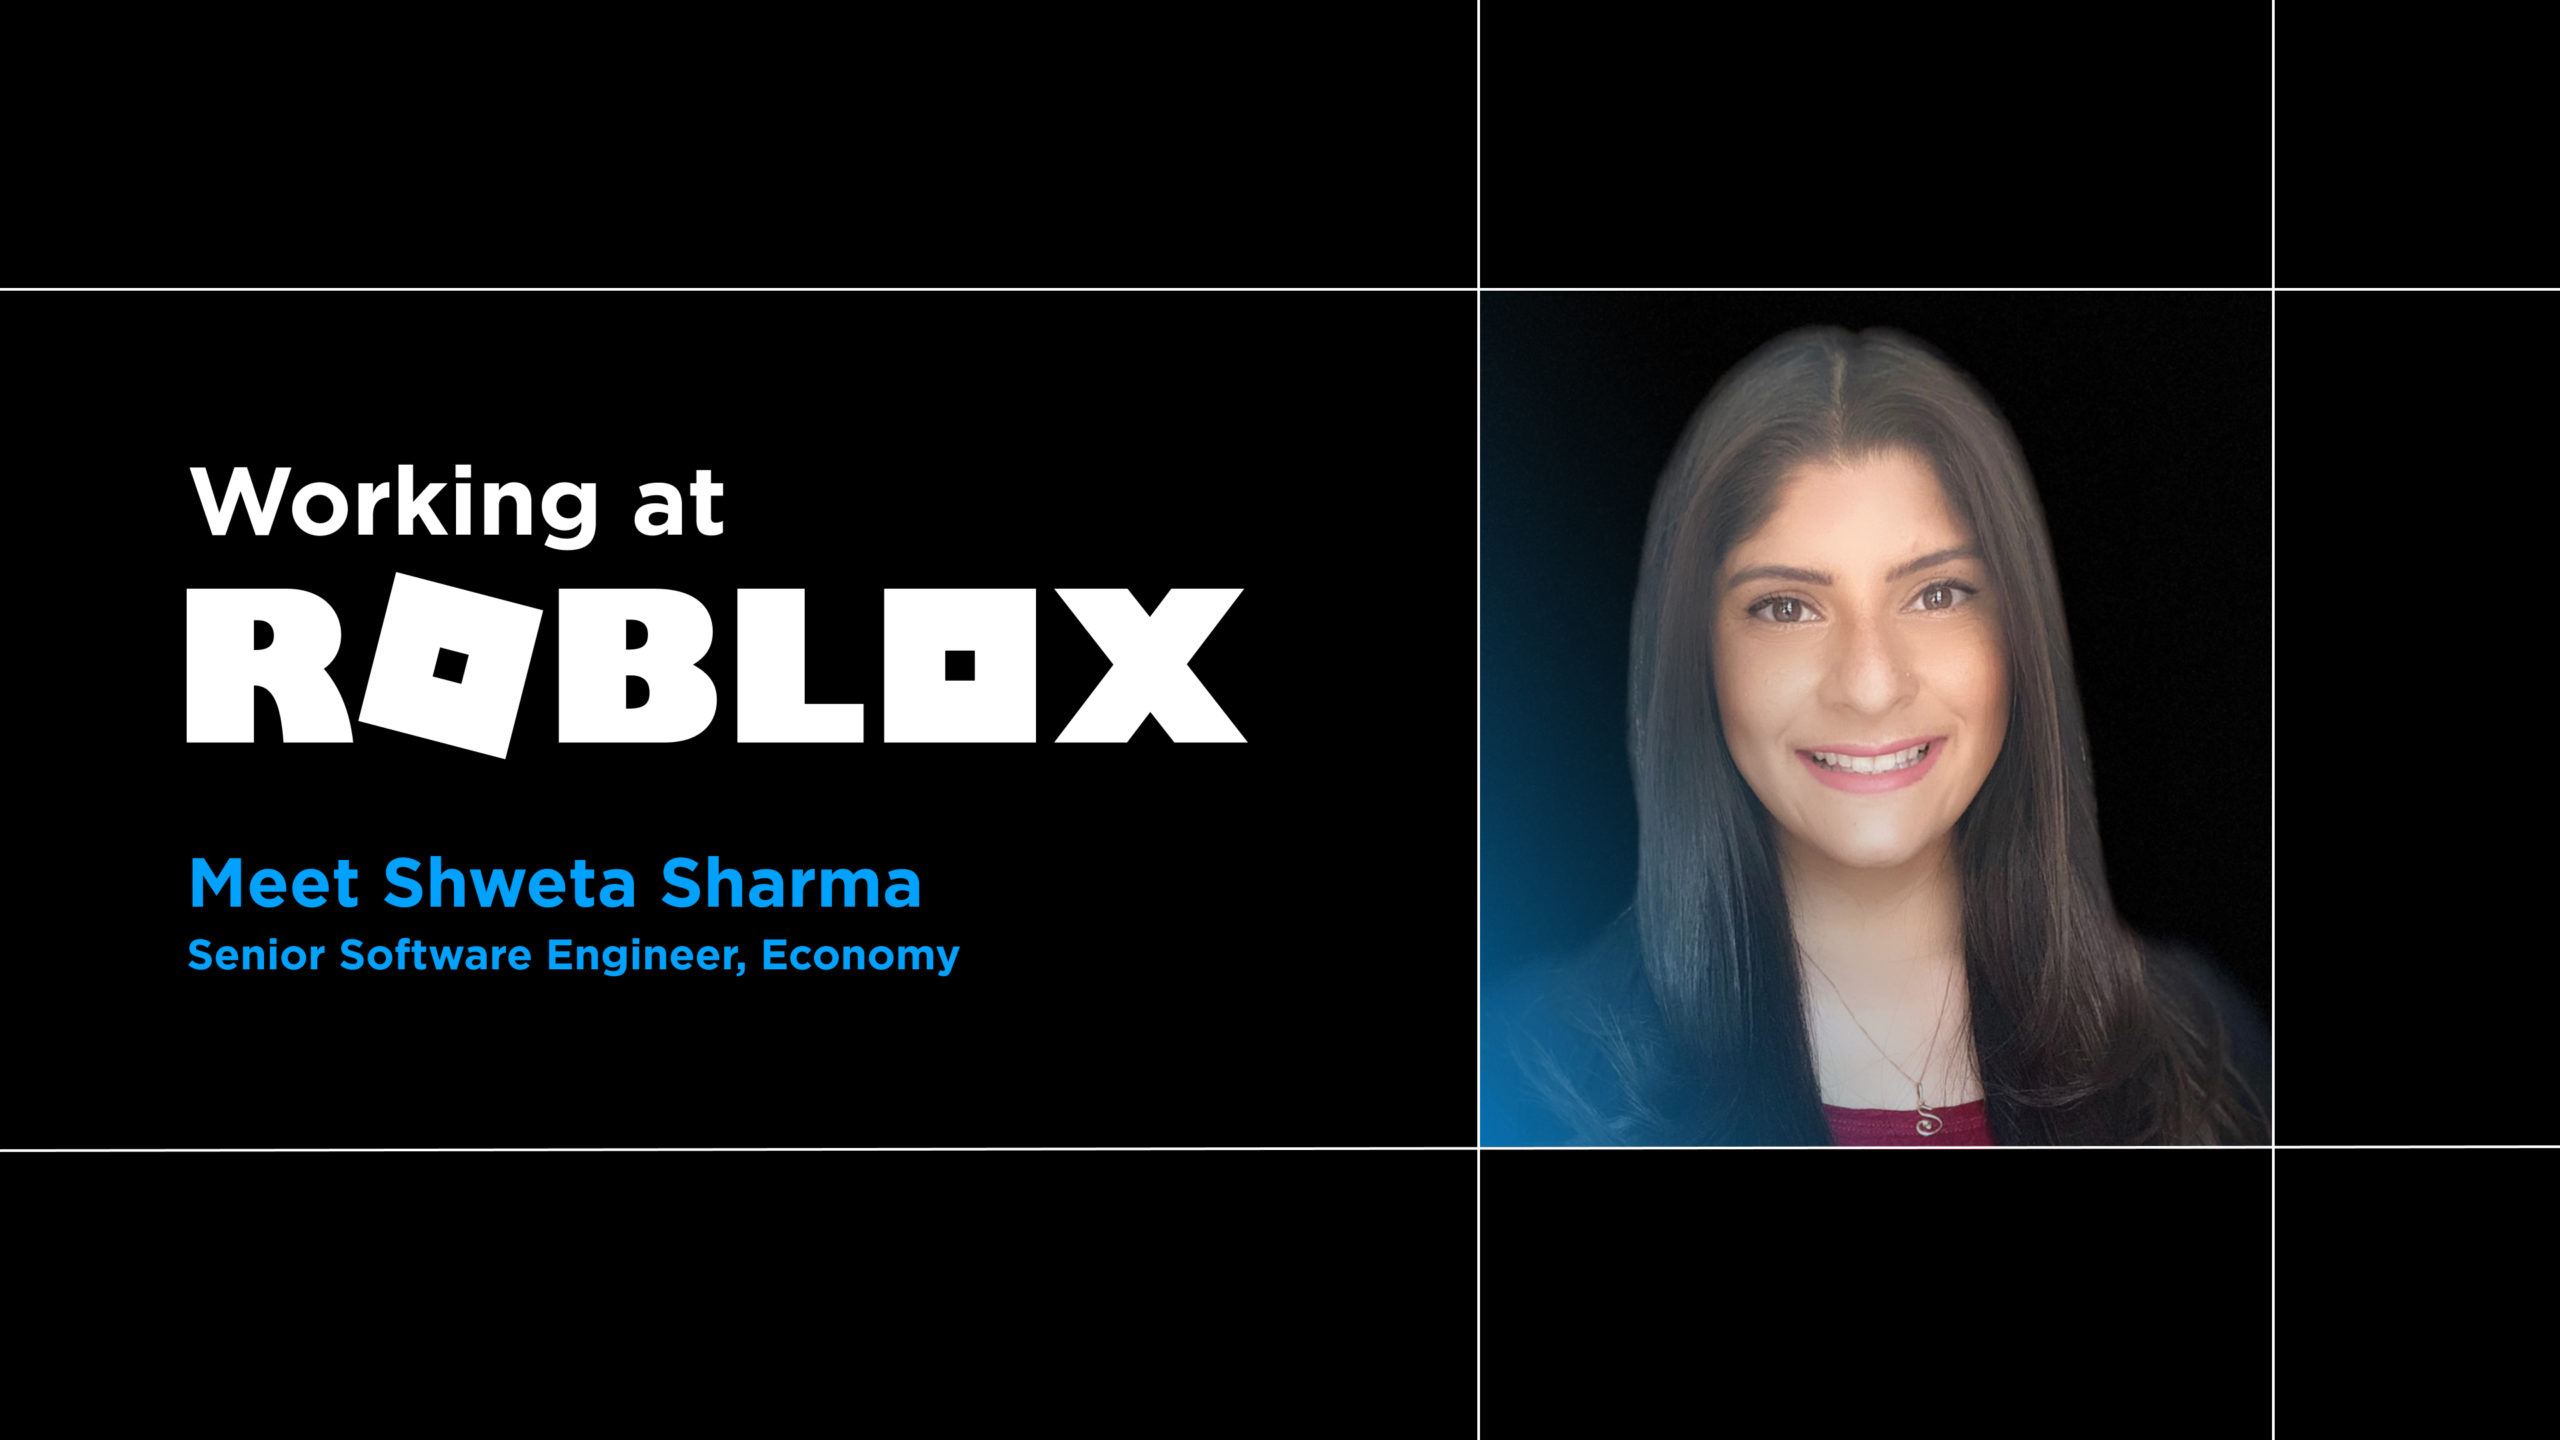 Working At Roblox Meet Shweta Sharma Roblox Blog - roblox software engineer salary